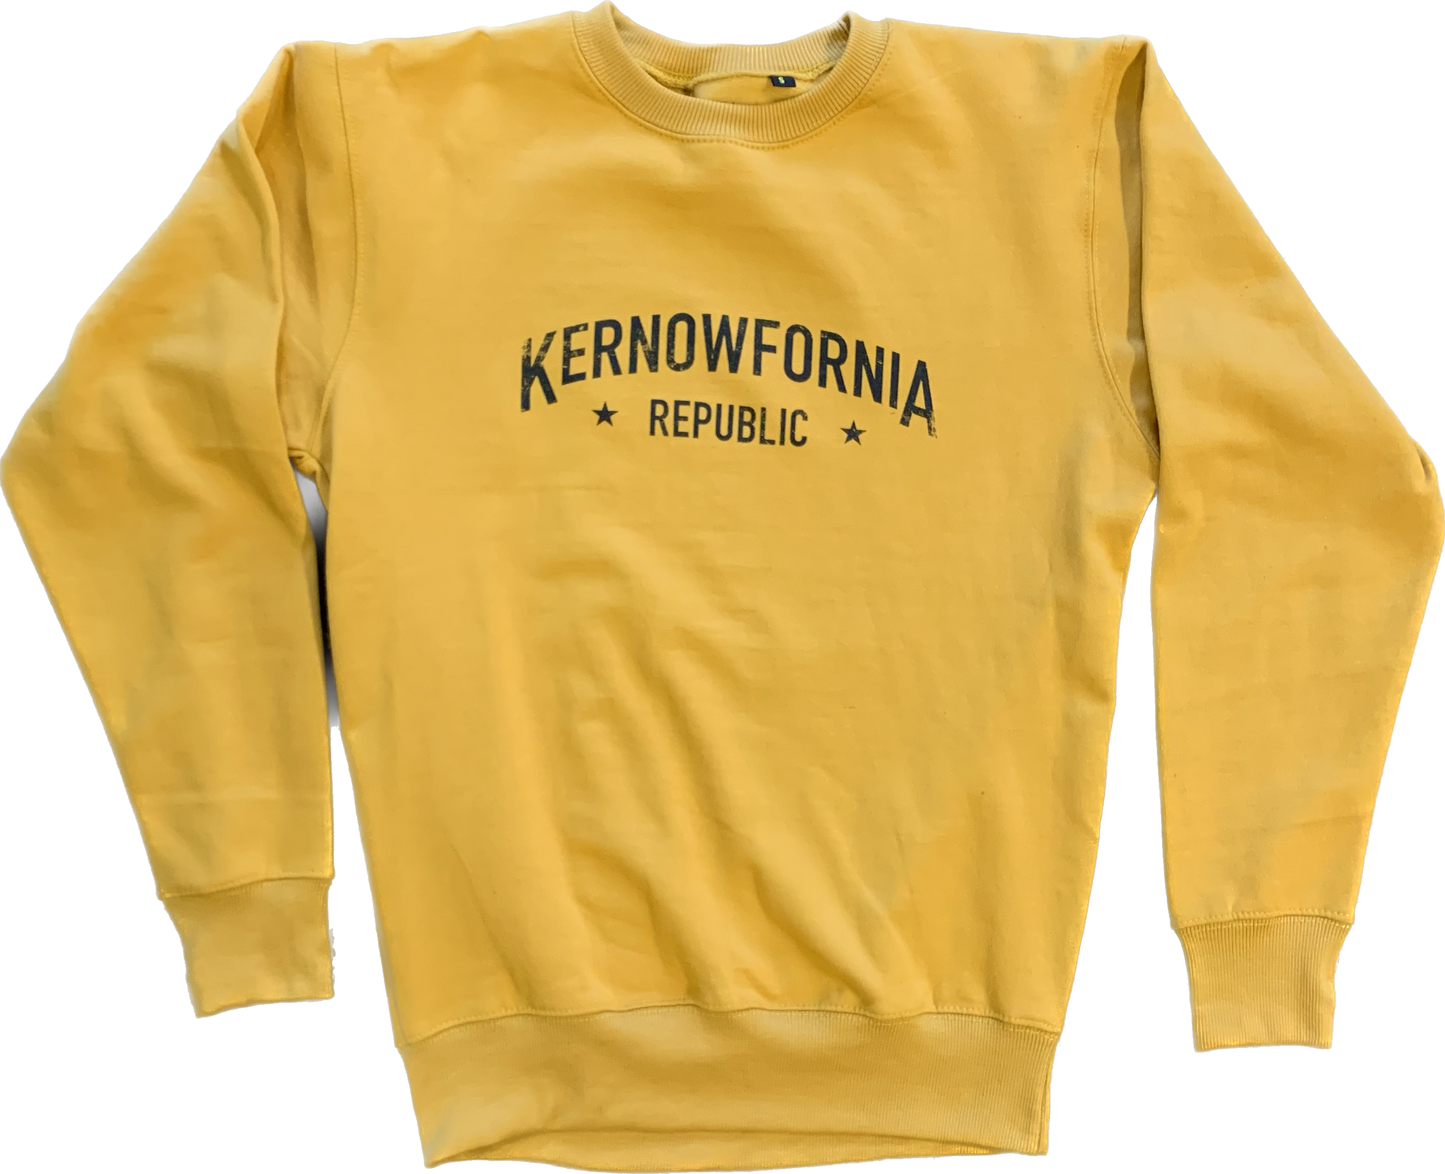 Kernowfornia sweatshirt